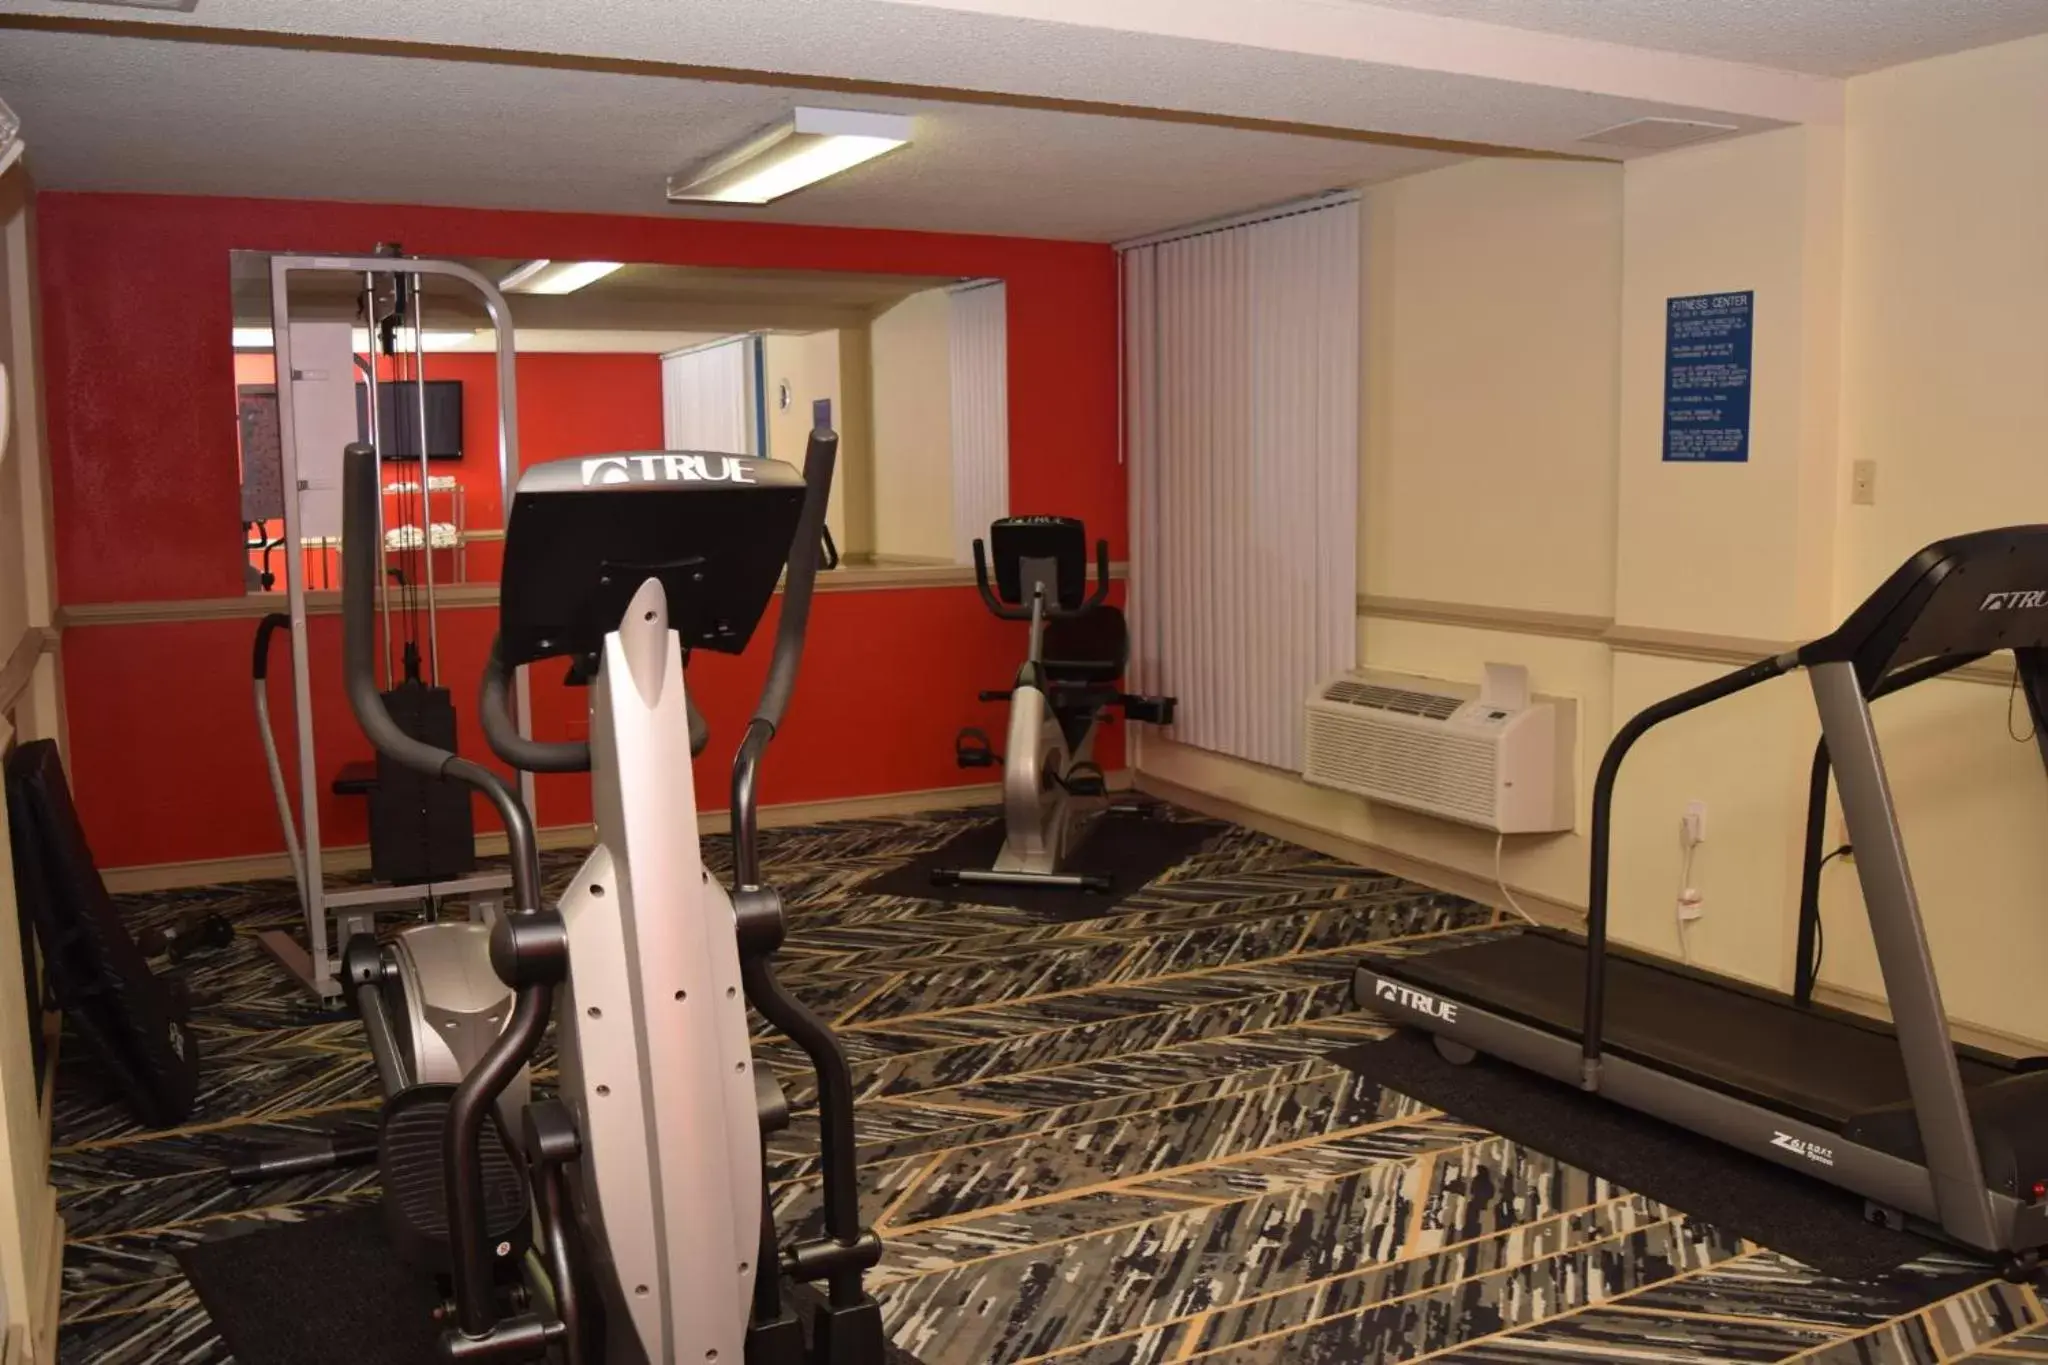 Fitness centre/facilities, Fitness Center/Facilities in Red Roof Inn Batavia